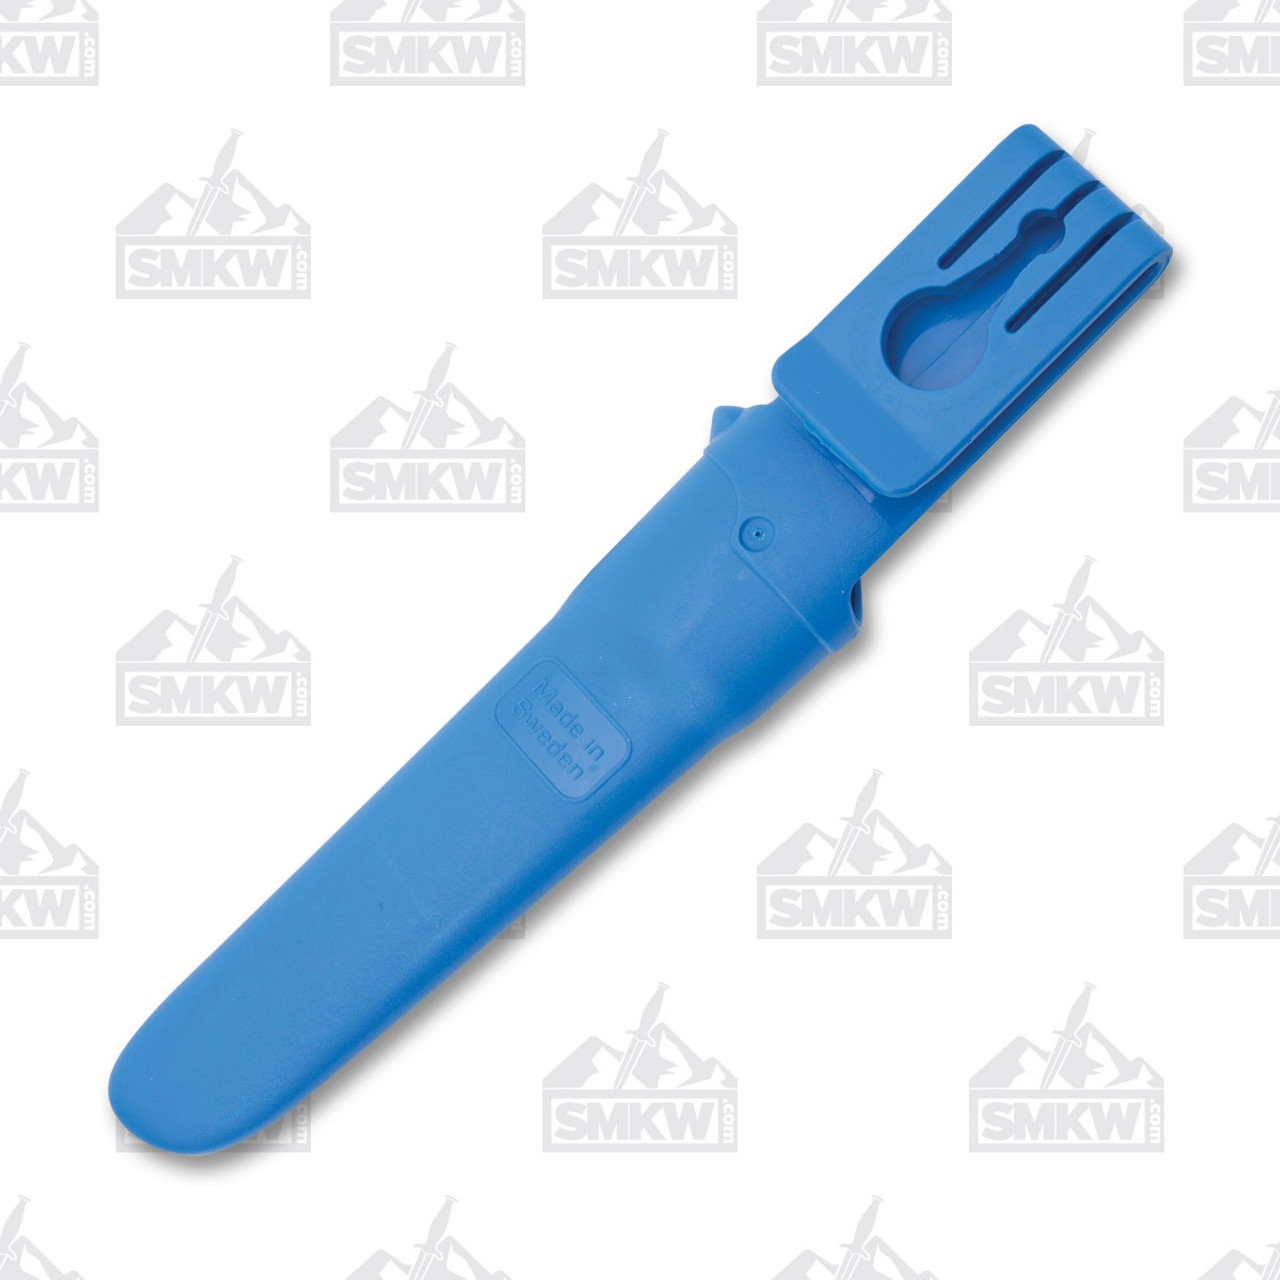 Mora Companion spark blue knife 13572B